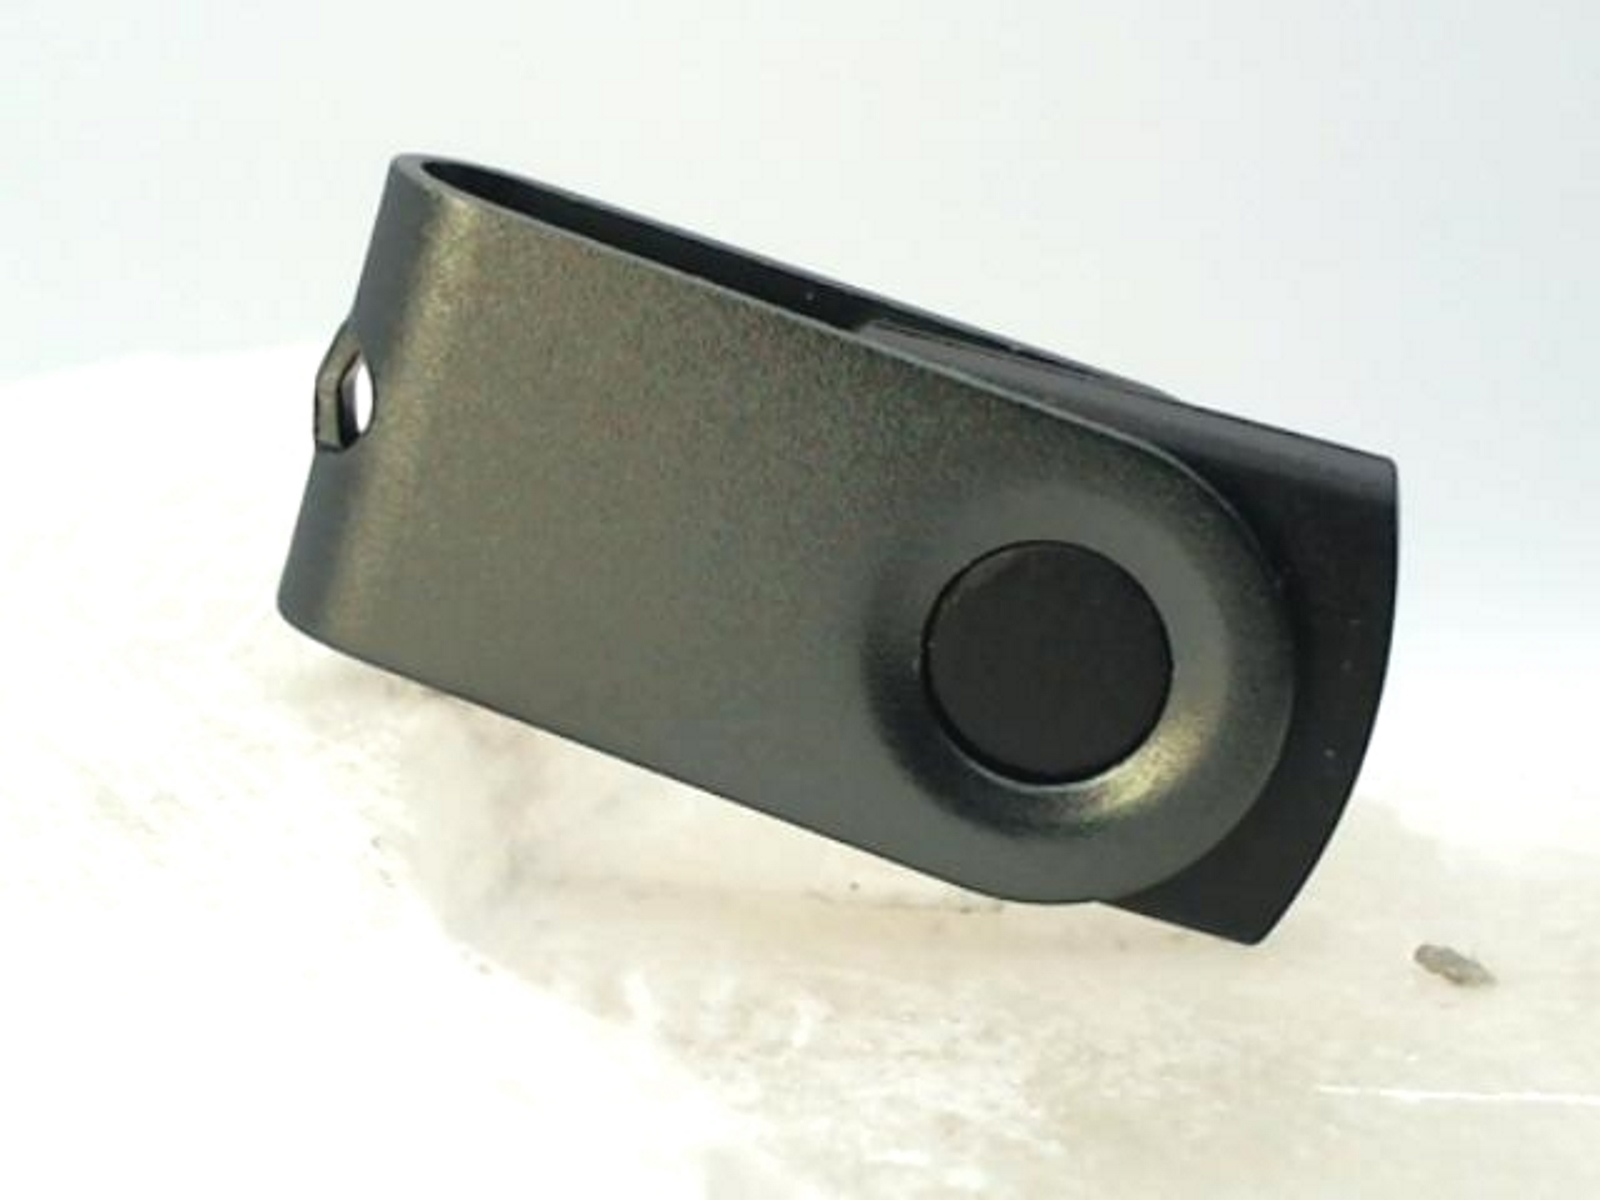 USB GERMANY MINI-SWIVEL ® 1 (Schwarz-Graumetall, GB) USB-Stick